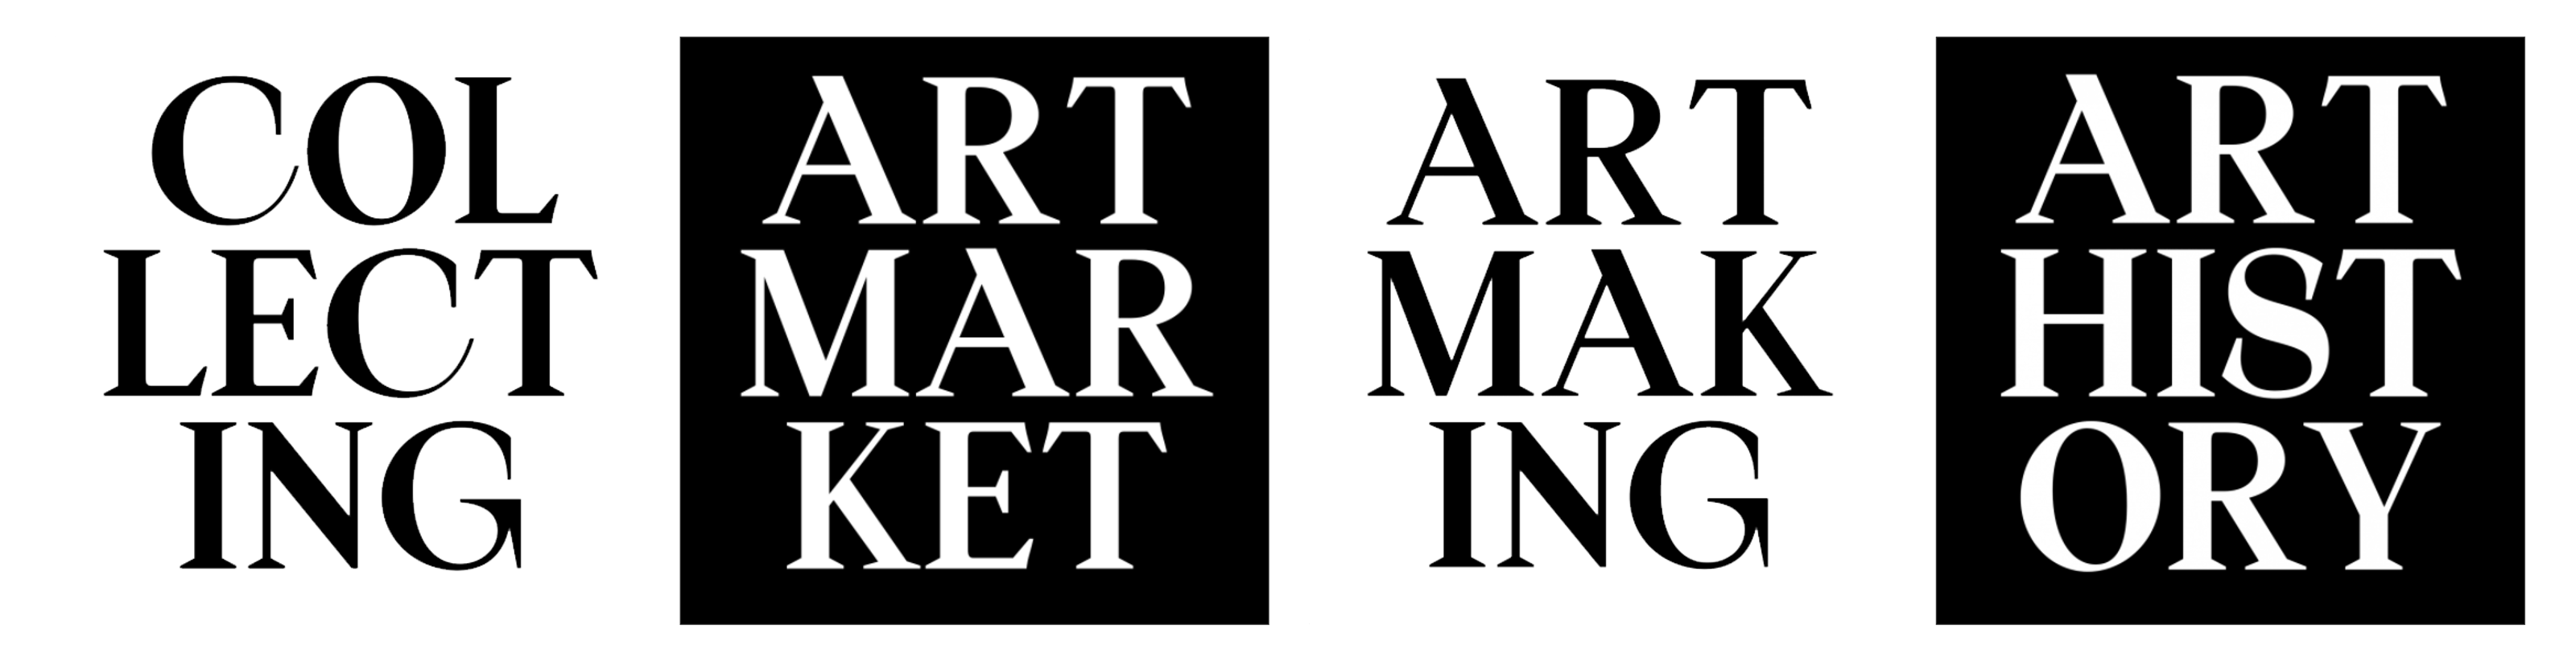 Collecting - Art Market - Art Making - Art History